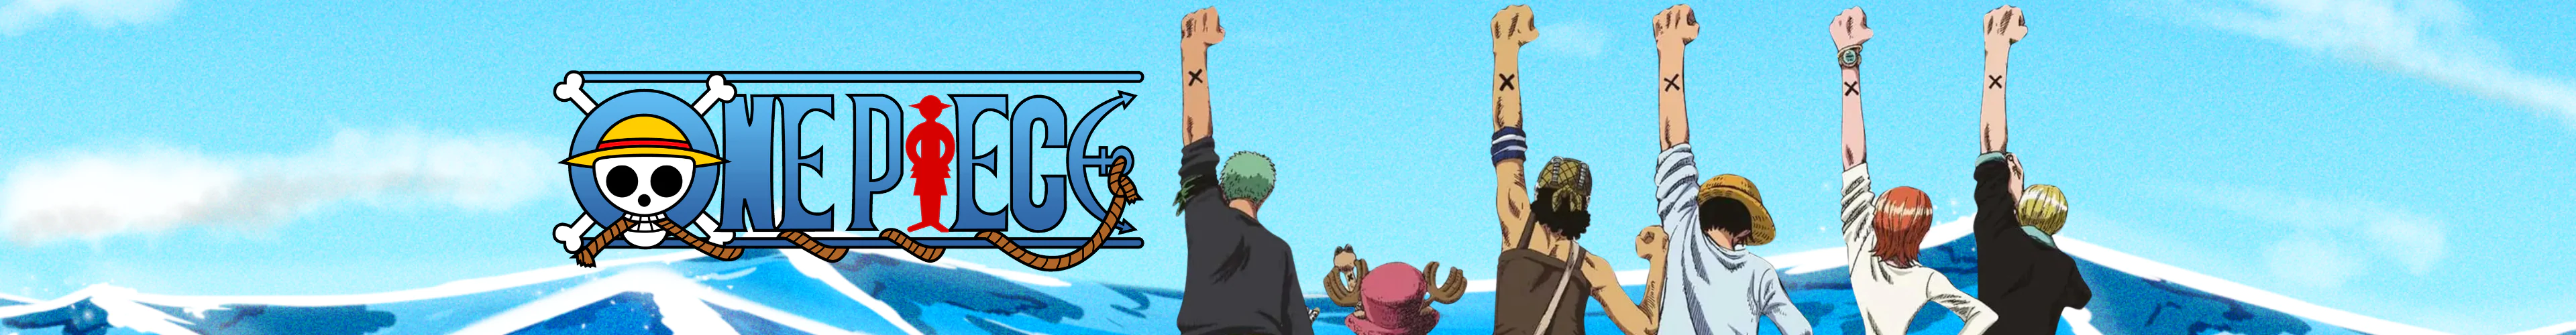 One Piece tischwaren  banner